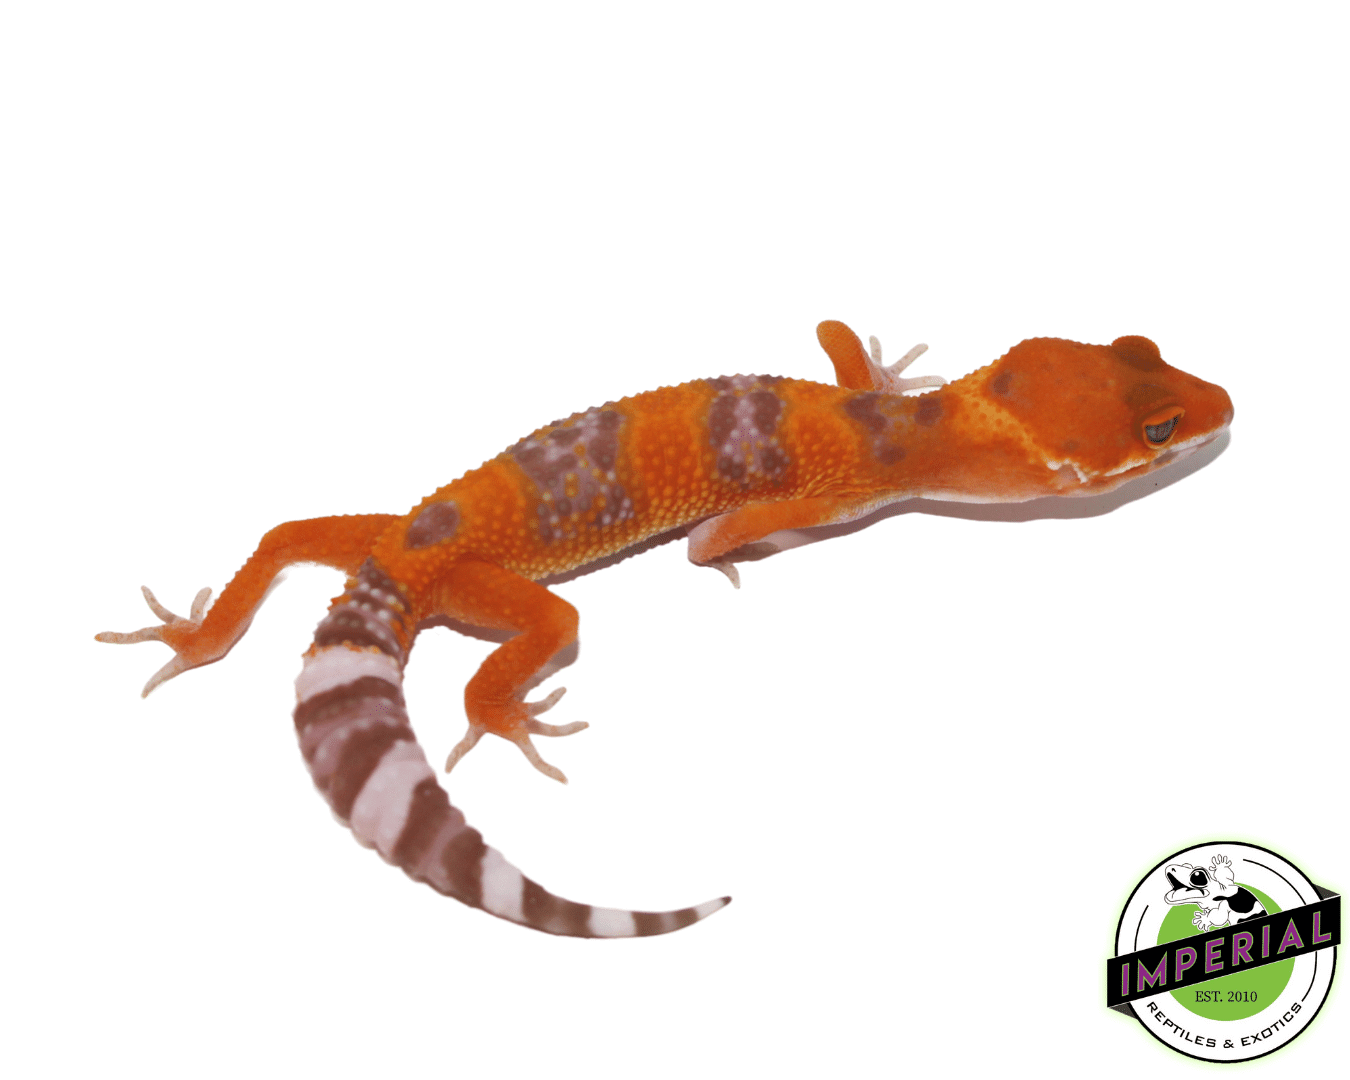 tangerine tremper leopard gecko for sale, buy reptiles online